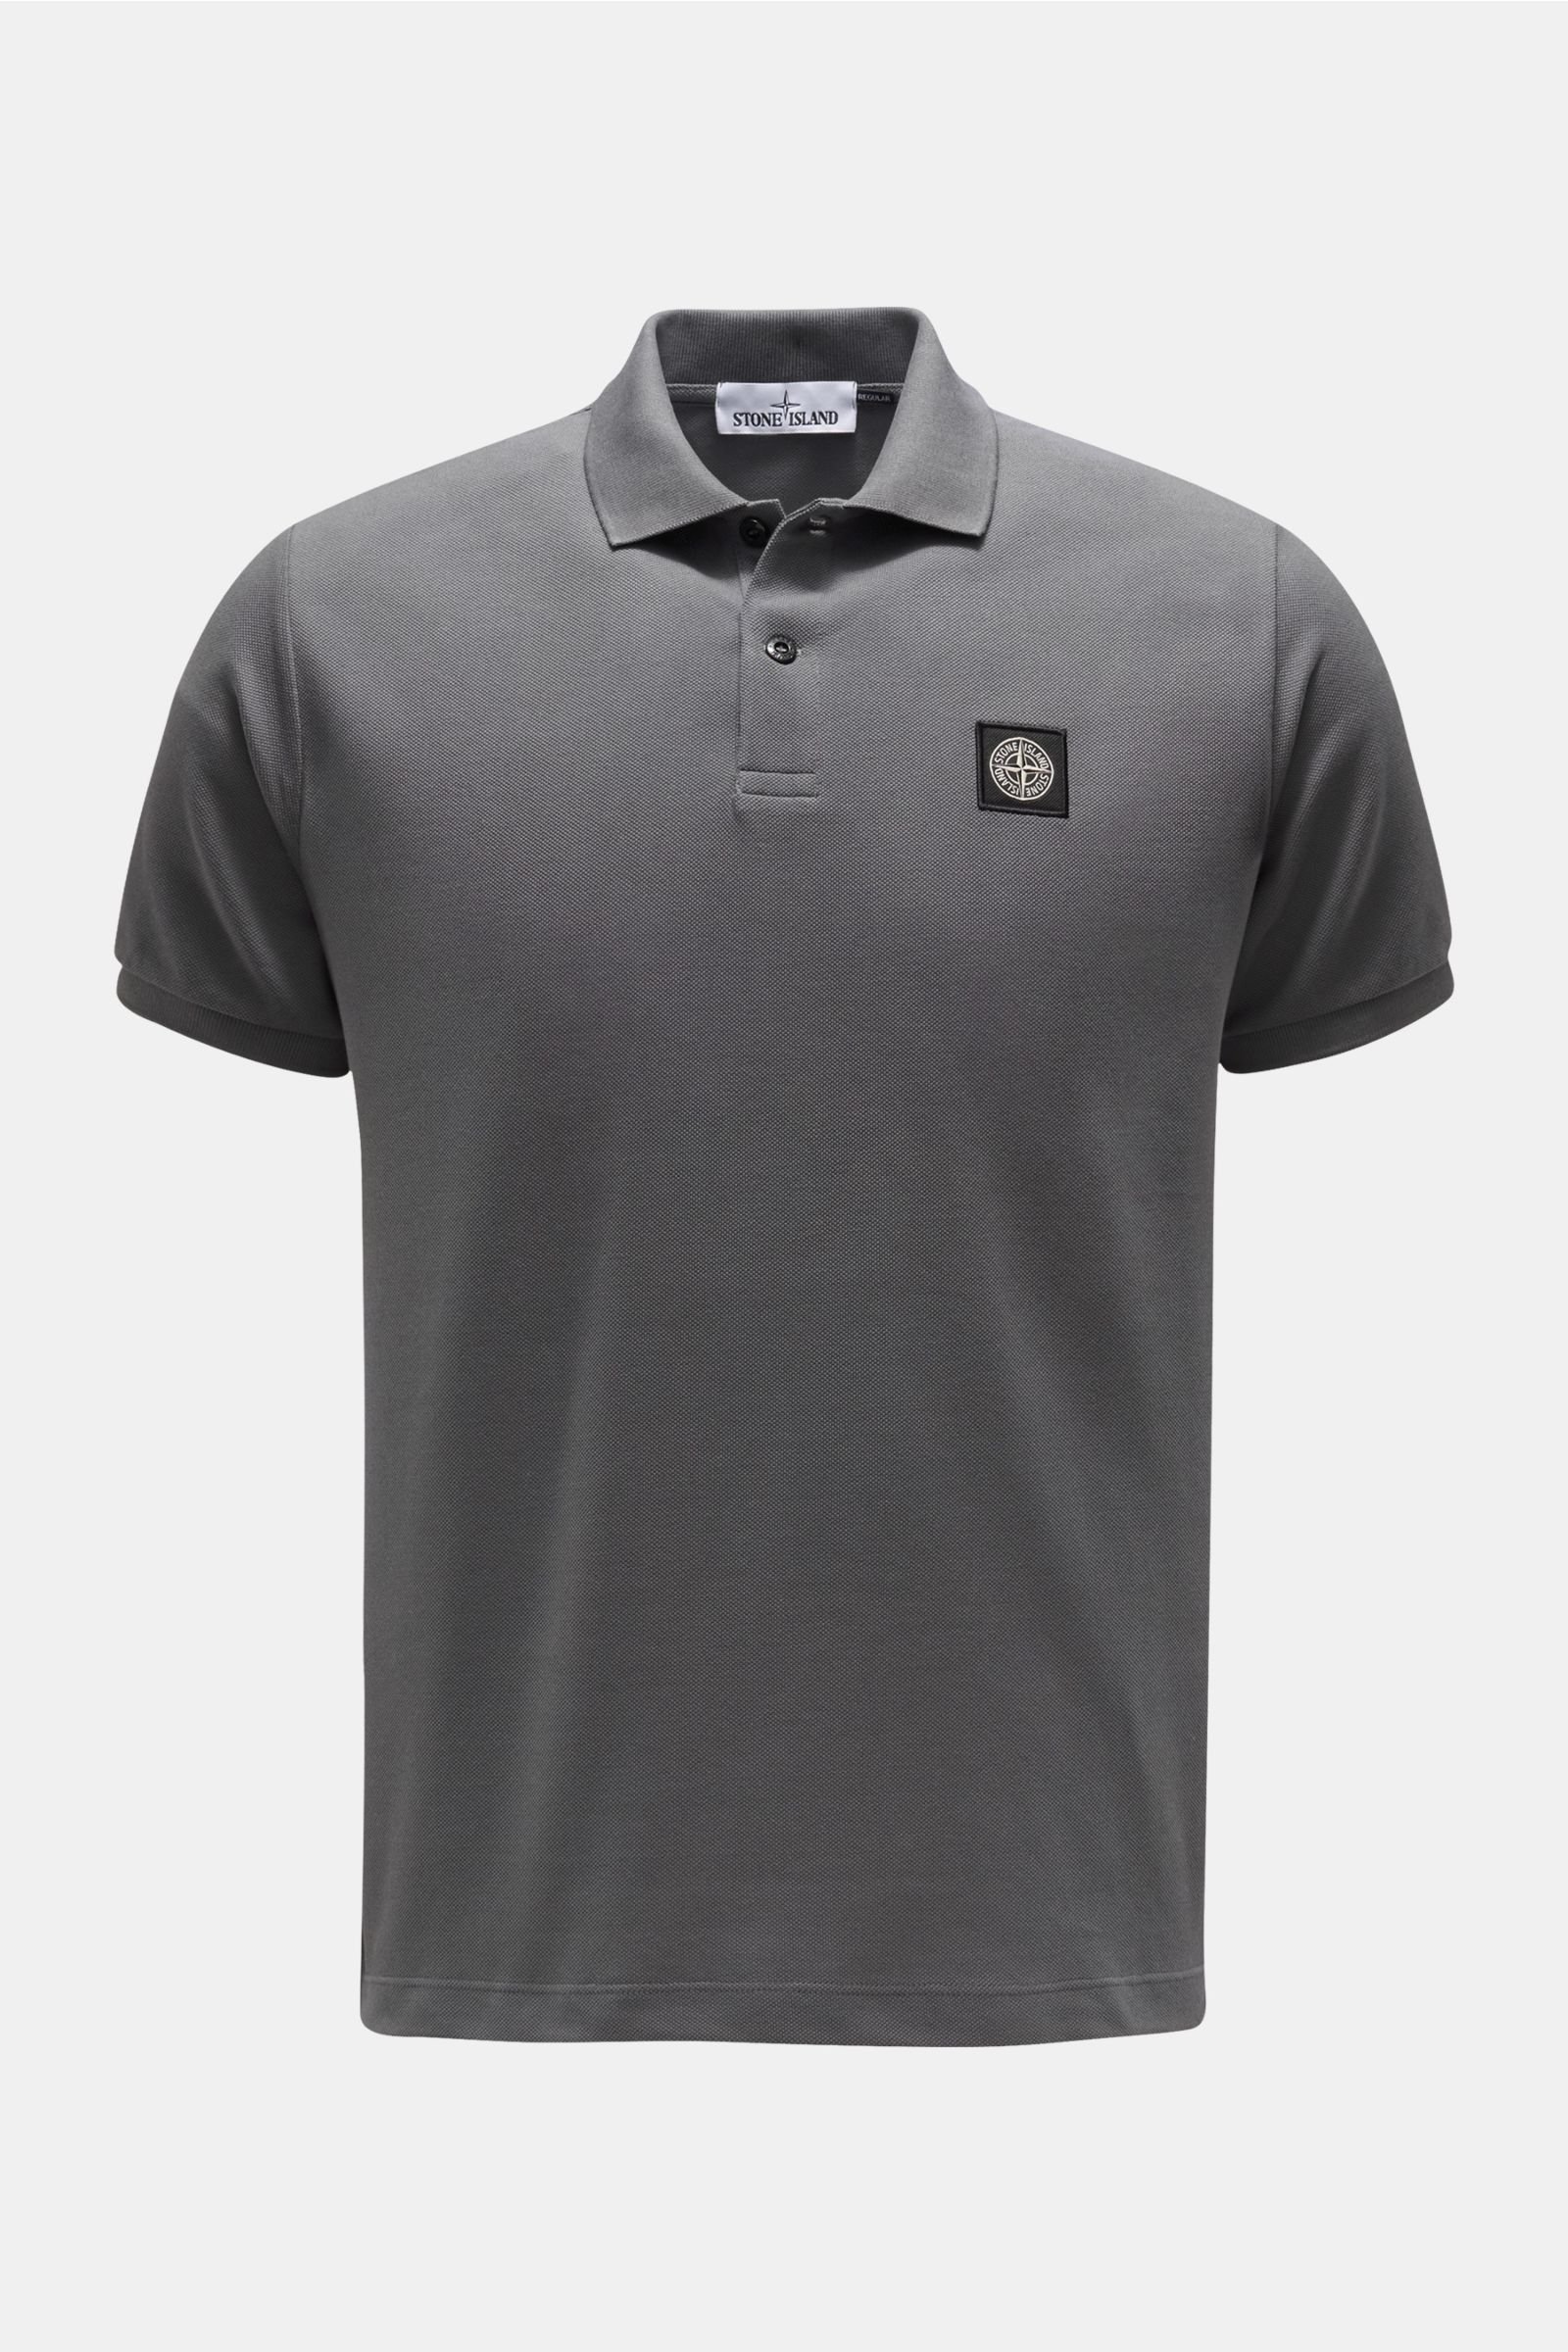 Polo shirt dark grey